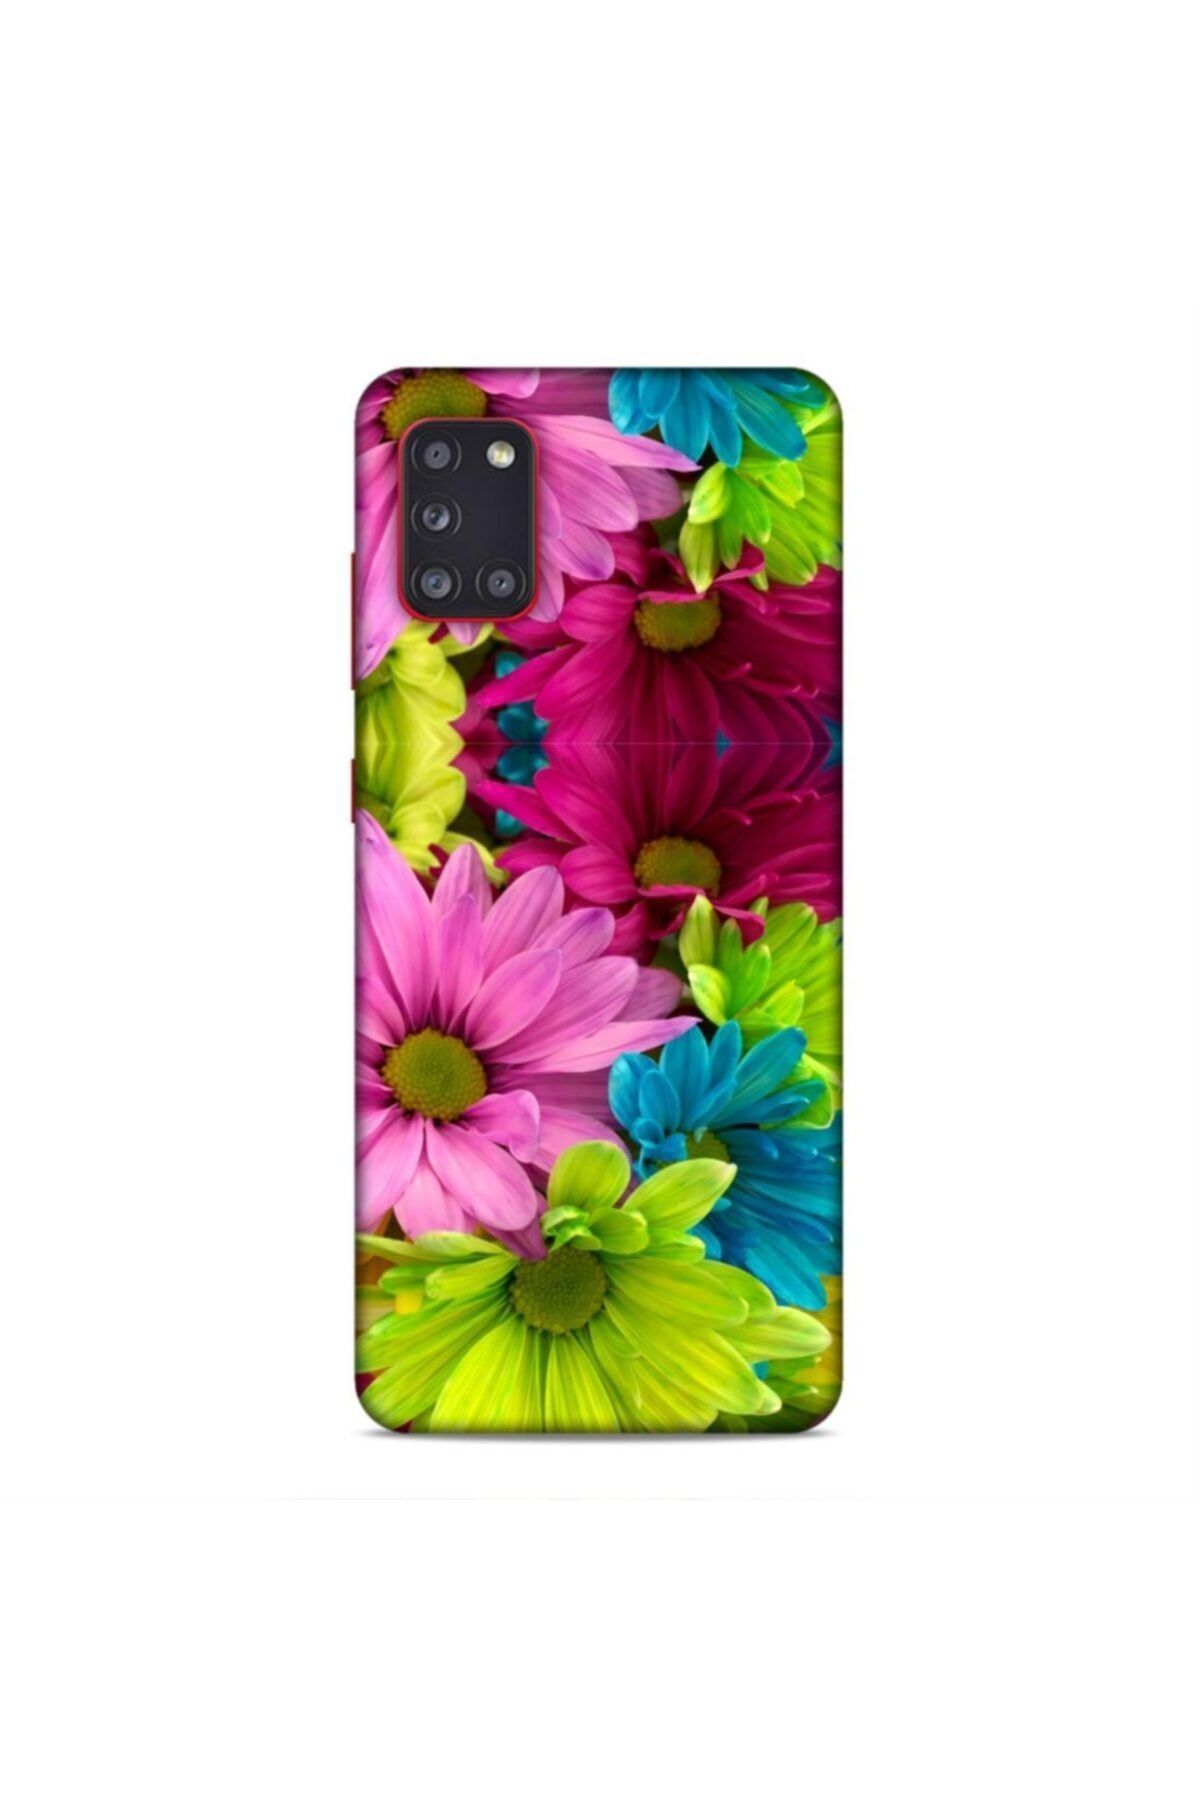 Pickcase Samsung Galaxy A31 Renkli Çiçekler Kılıf